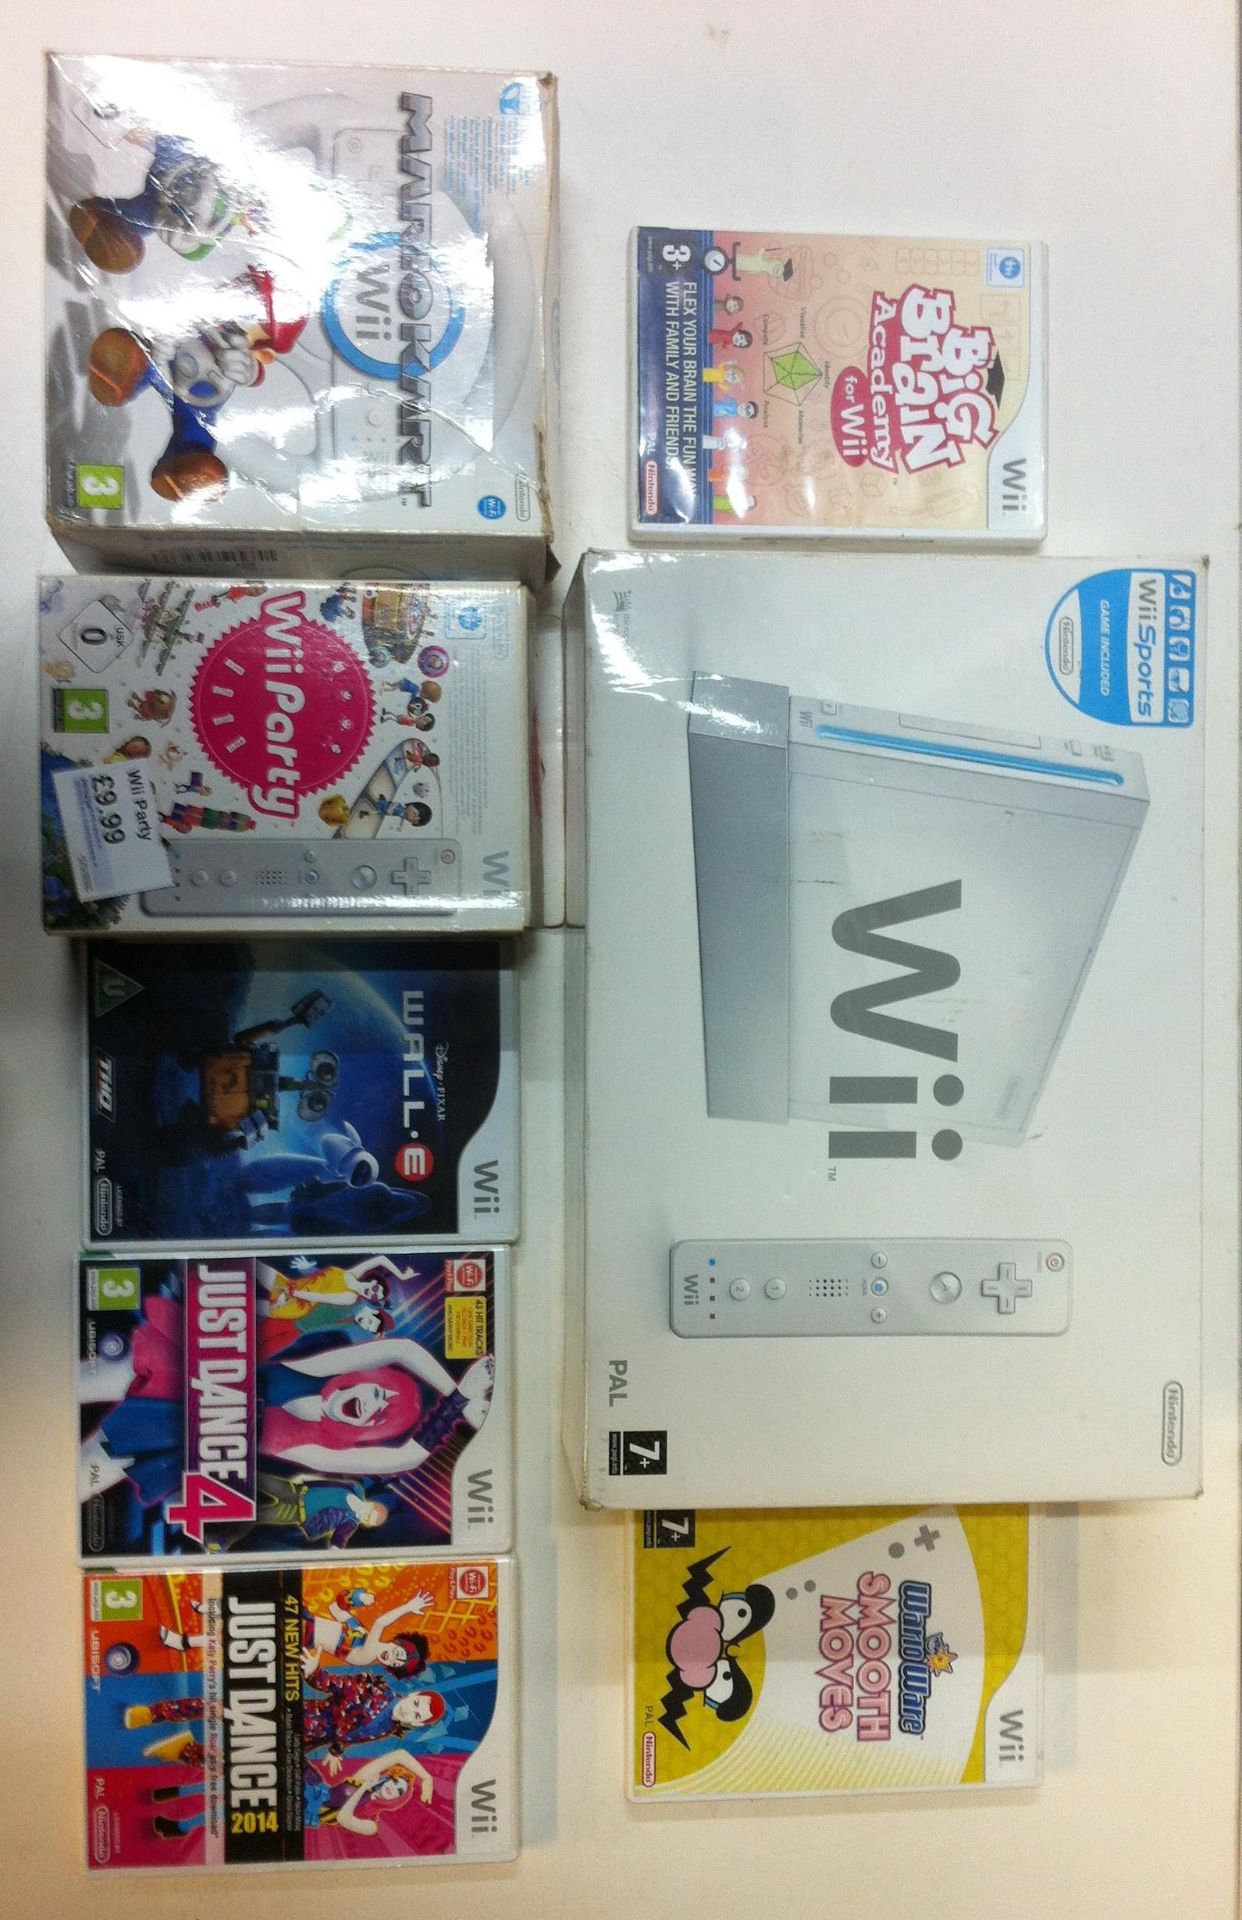 Nintendo Wii Console W/ Games Please See Description.